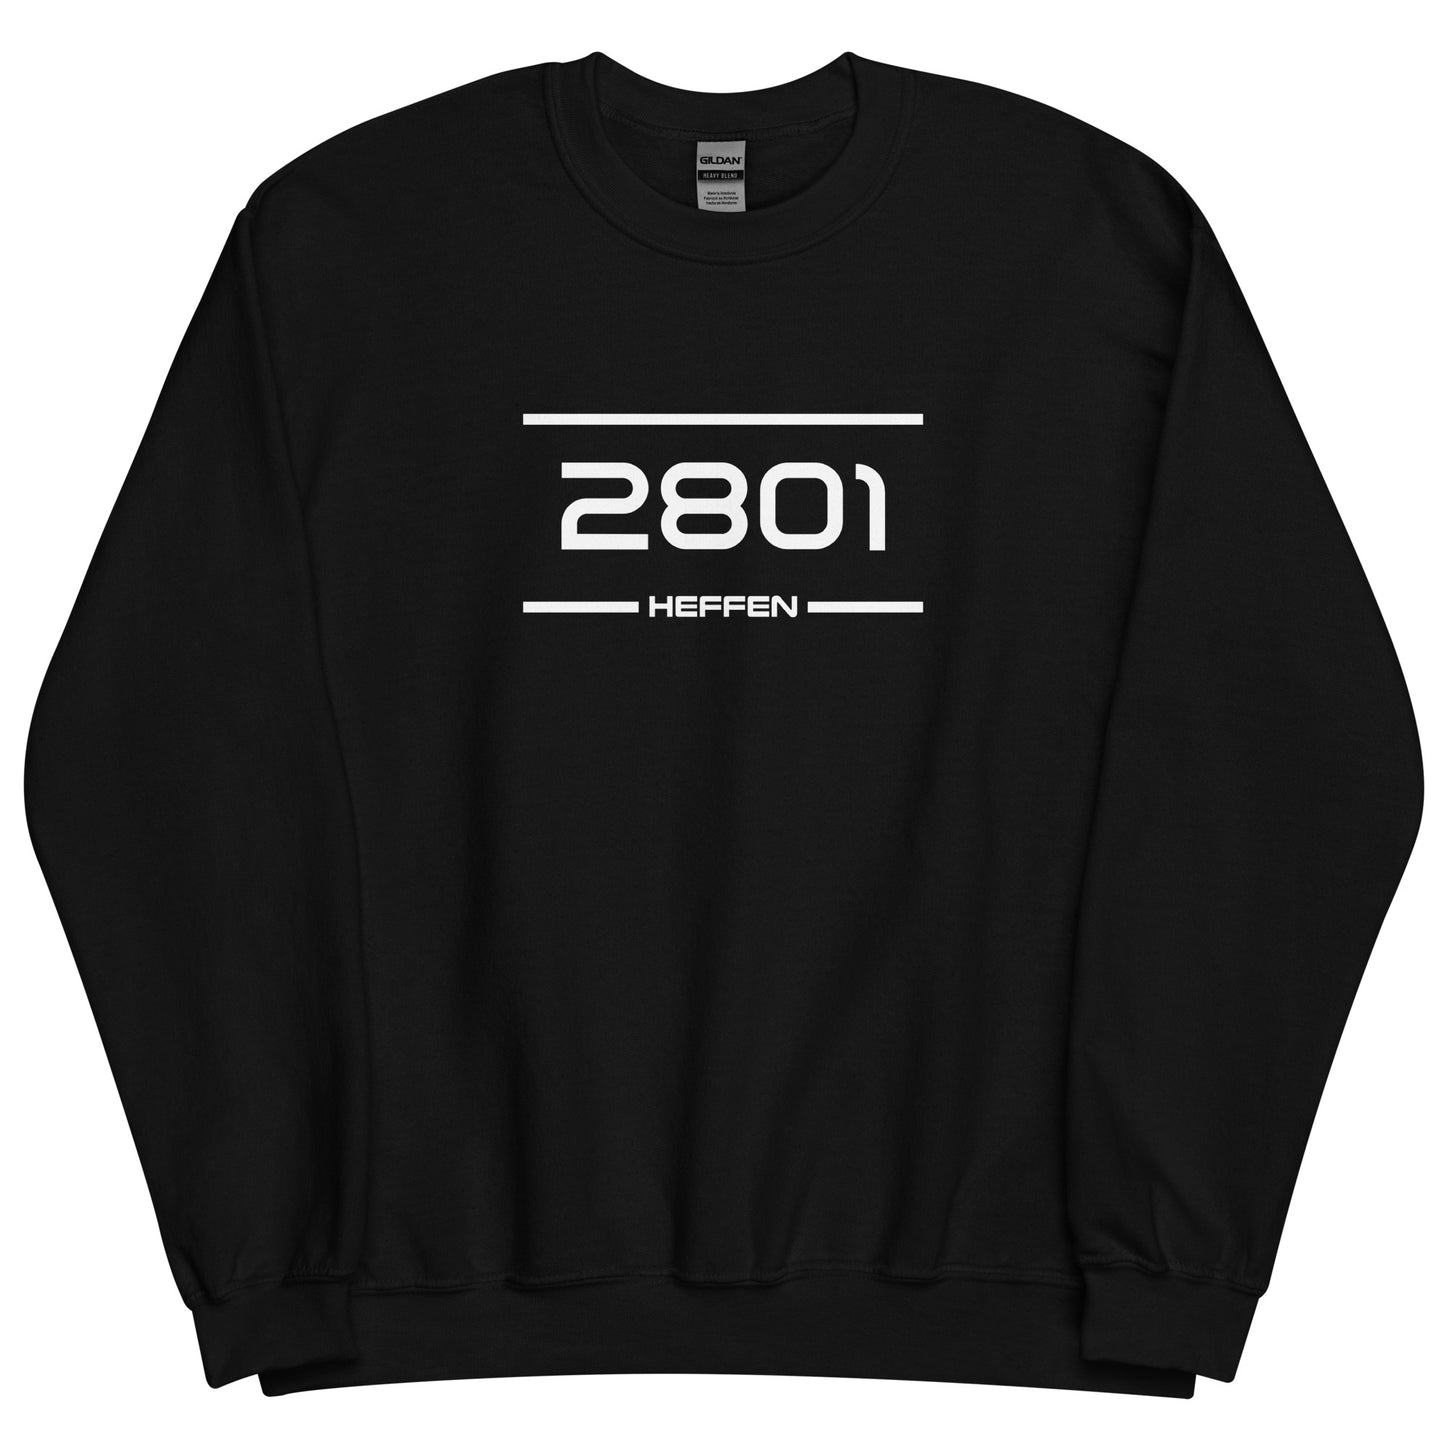 Sweater - 2801 - Heffen (M/V)